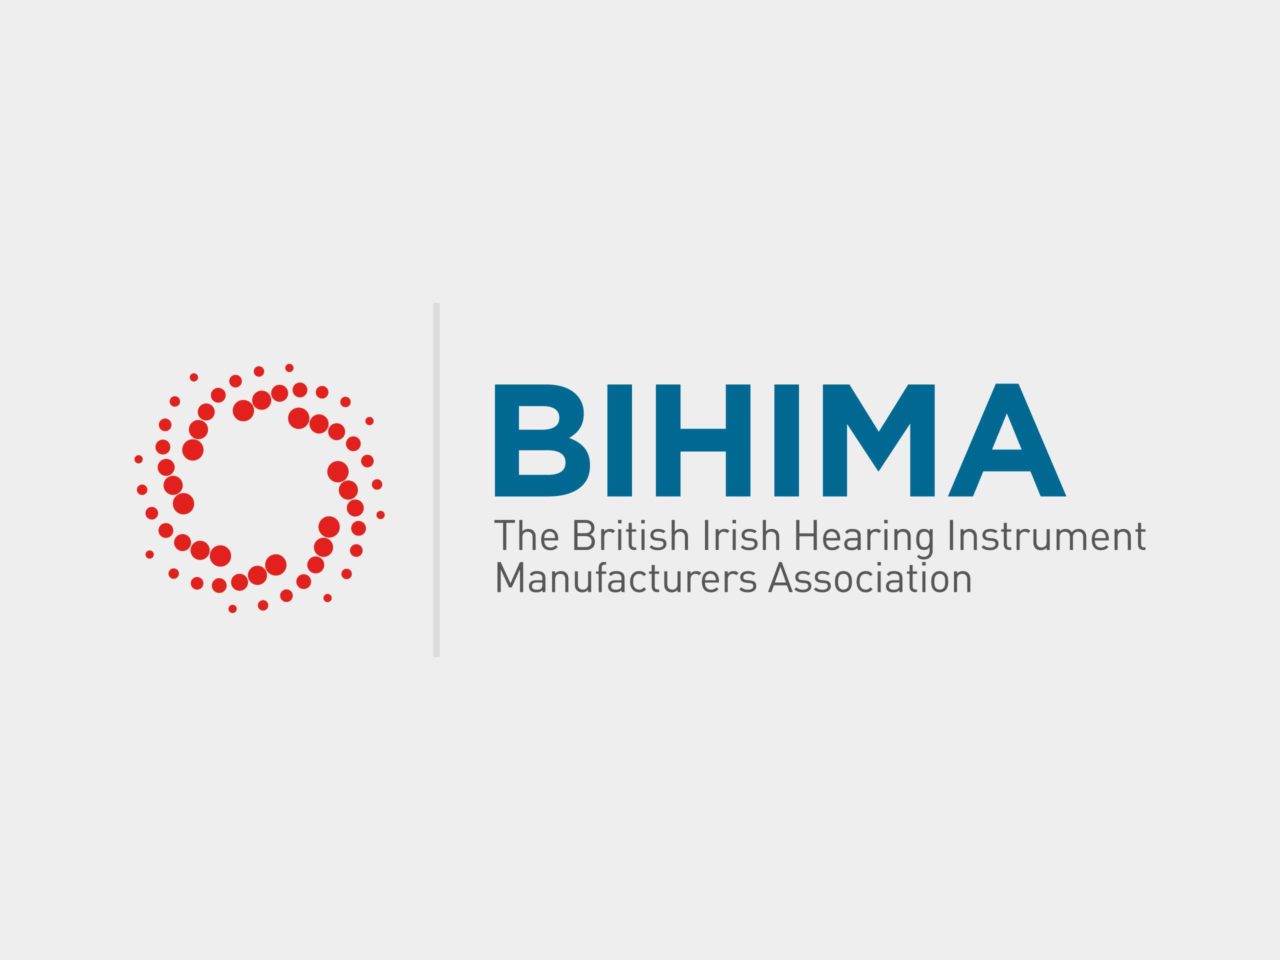 Showing the new BIHIMA logo